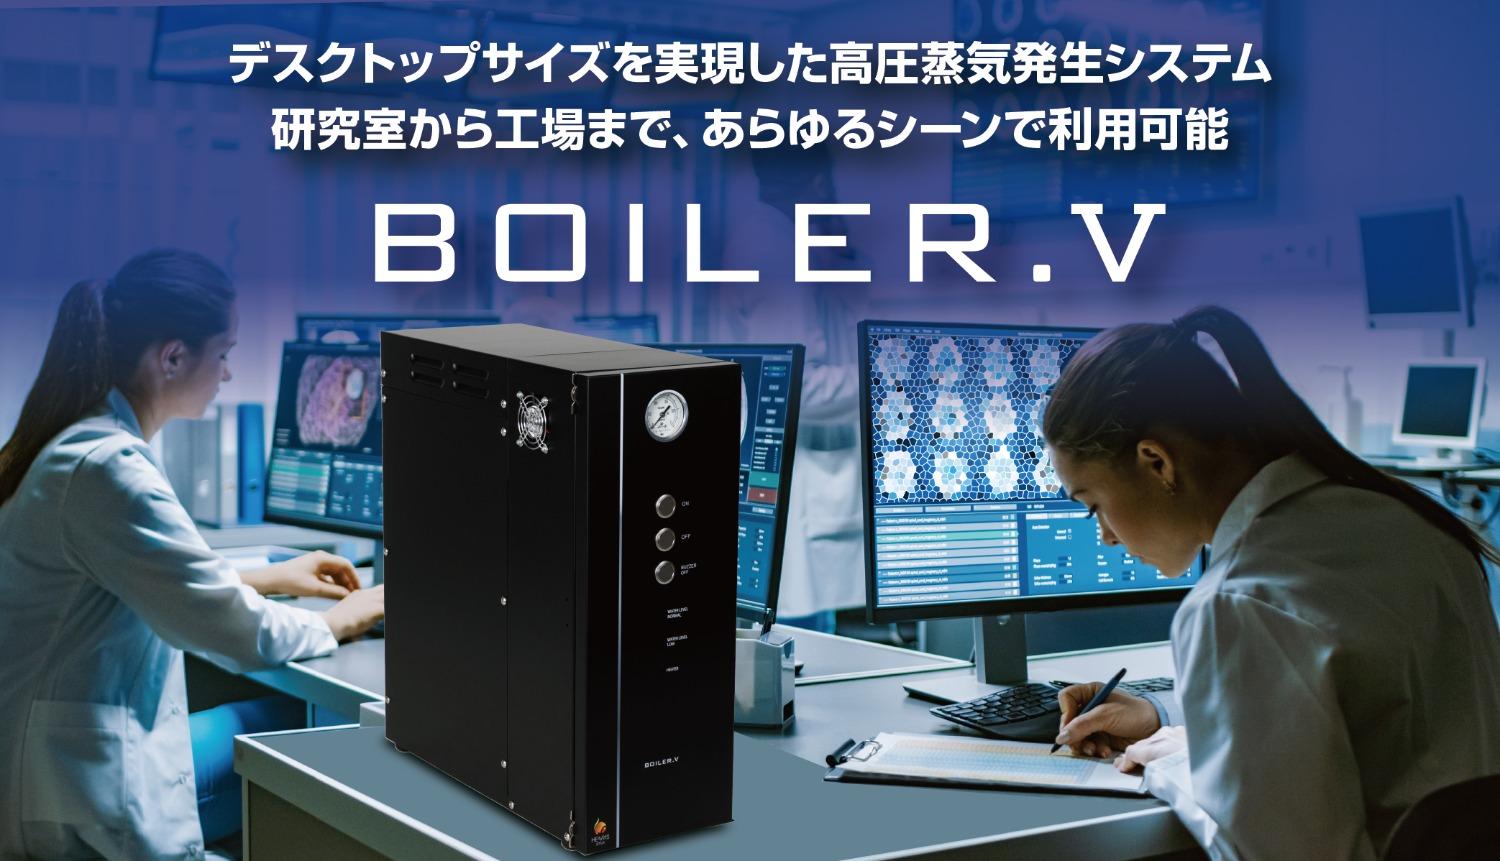 BoilerV_image.jpg